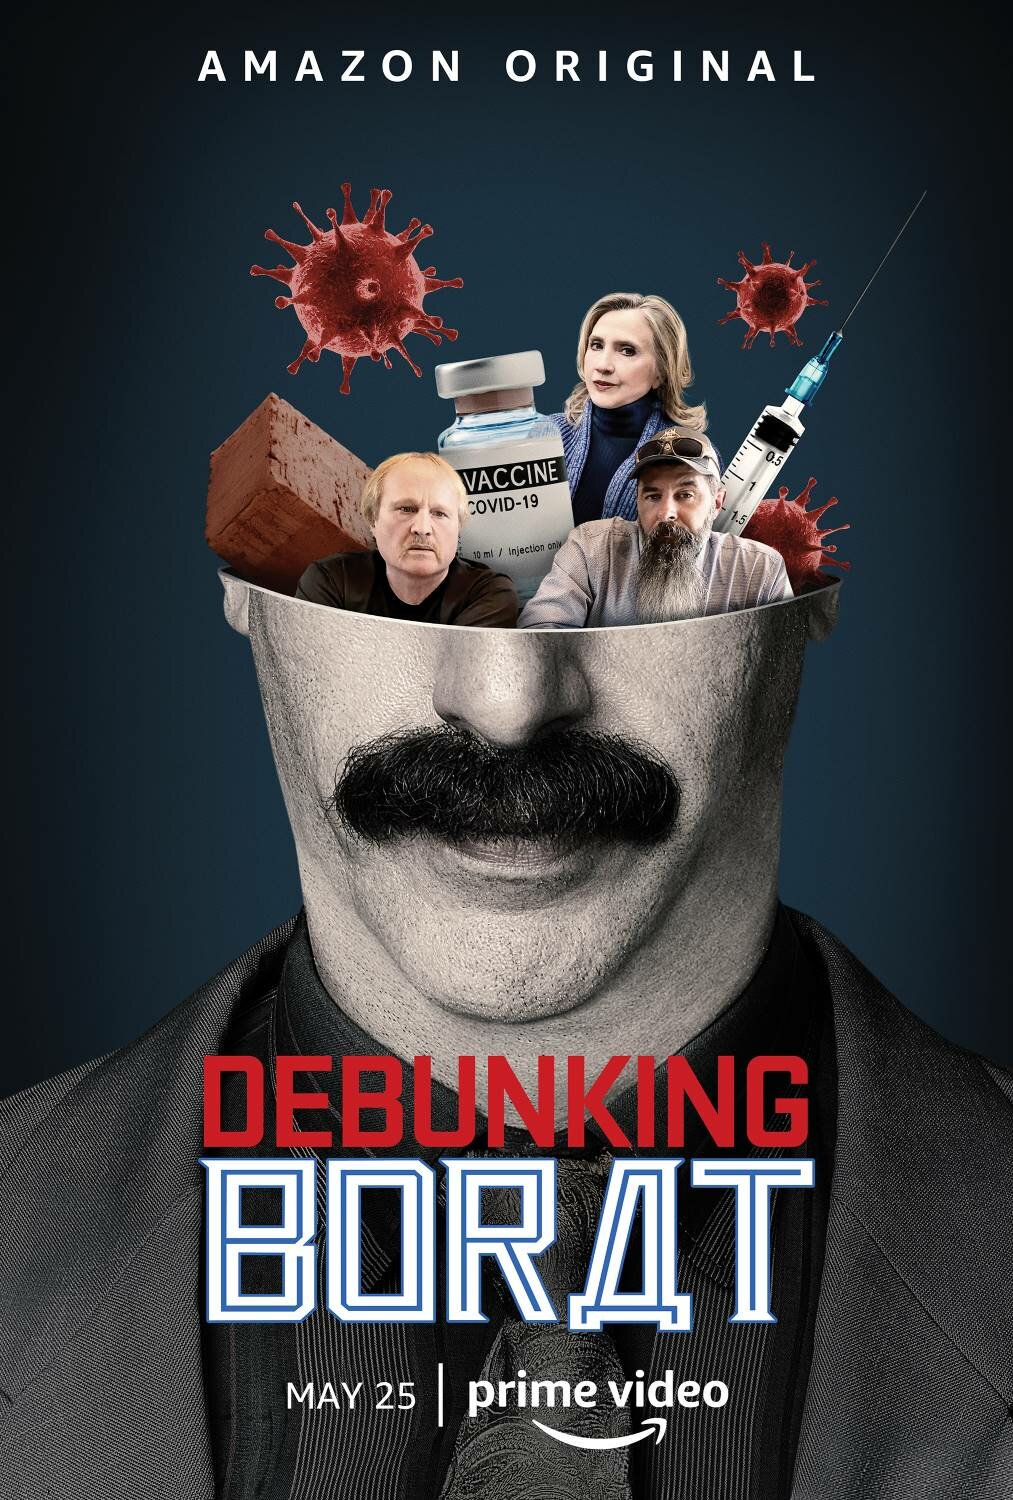 Borat's American Lockdown & Debunking Borat ne zaman